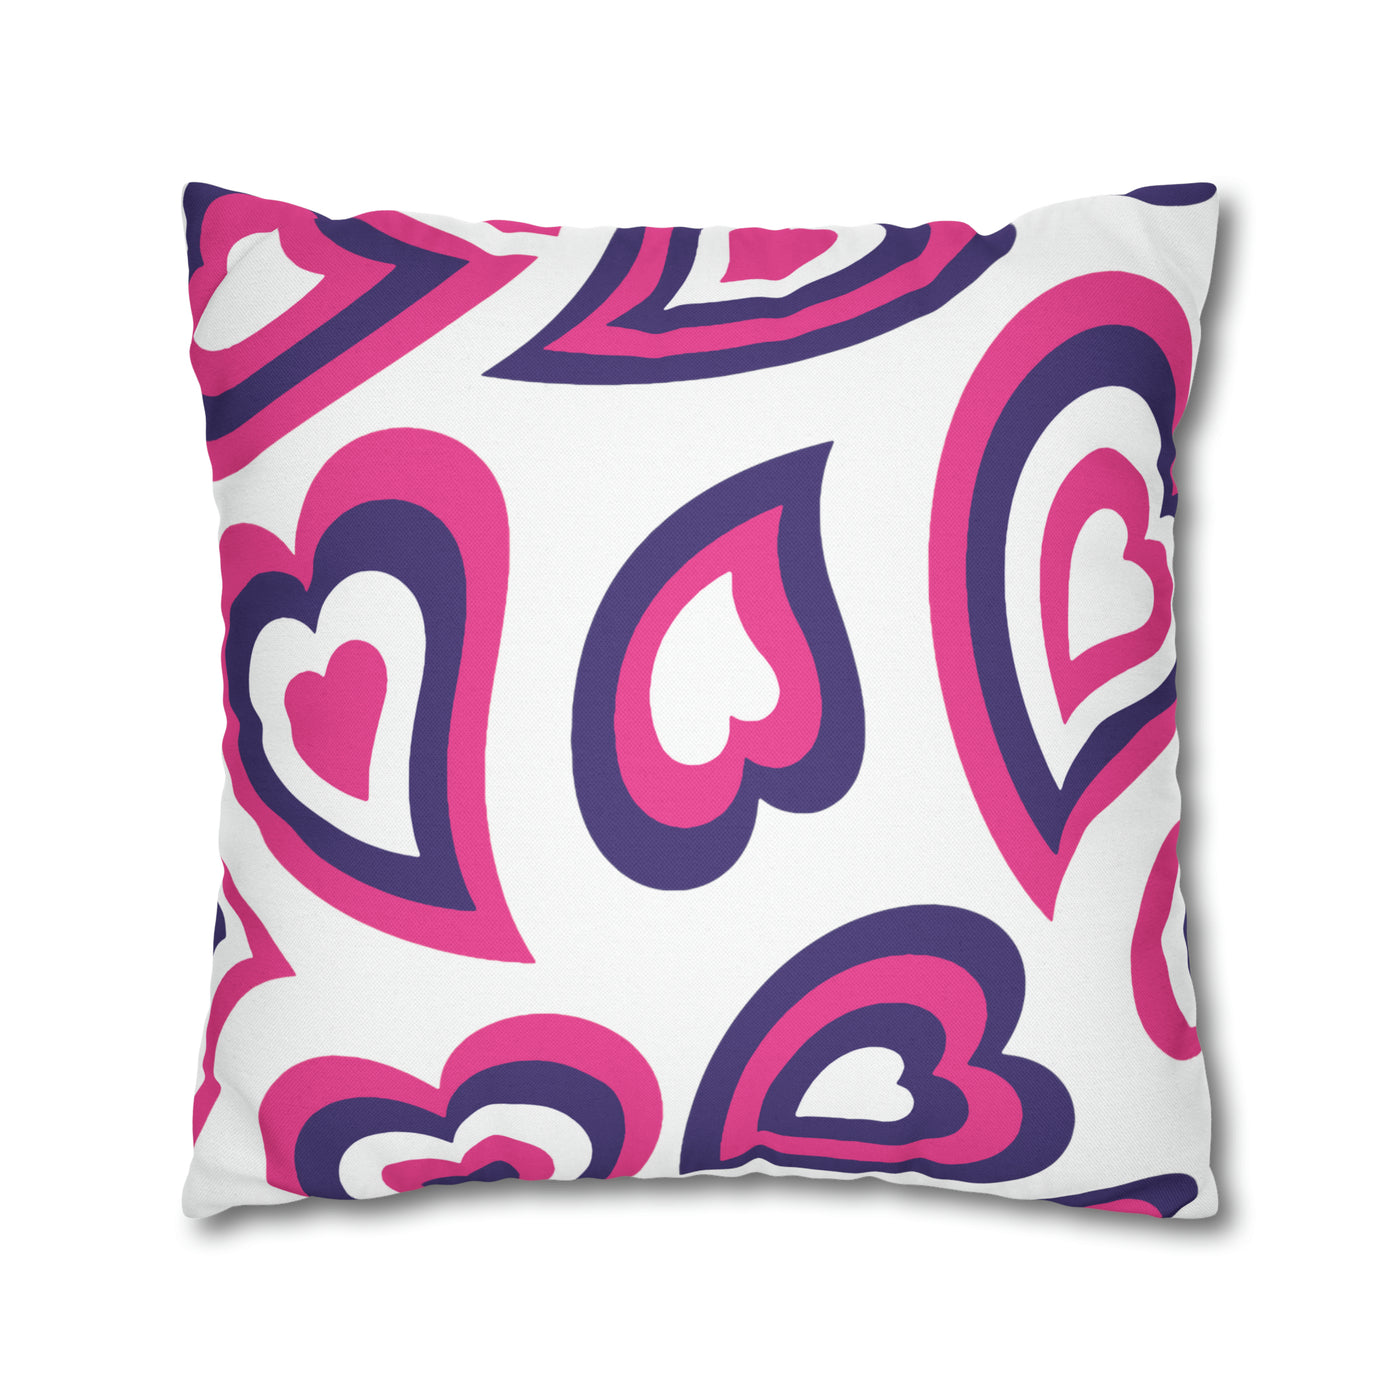 Retro Heart Pillow - Pink & Purple, Heart Pillow, Hearts, Valentine's Day, Sleepaway Camp Pillow, Camp Matoaka, Camp Pillow, Playroom Pillow